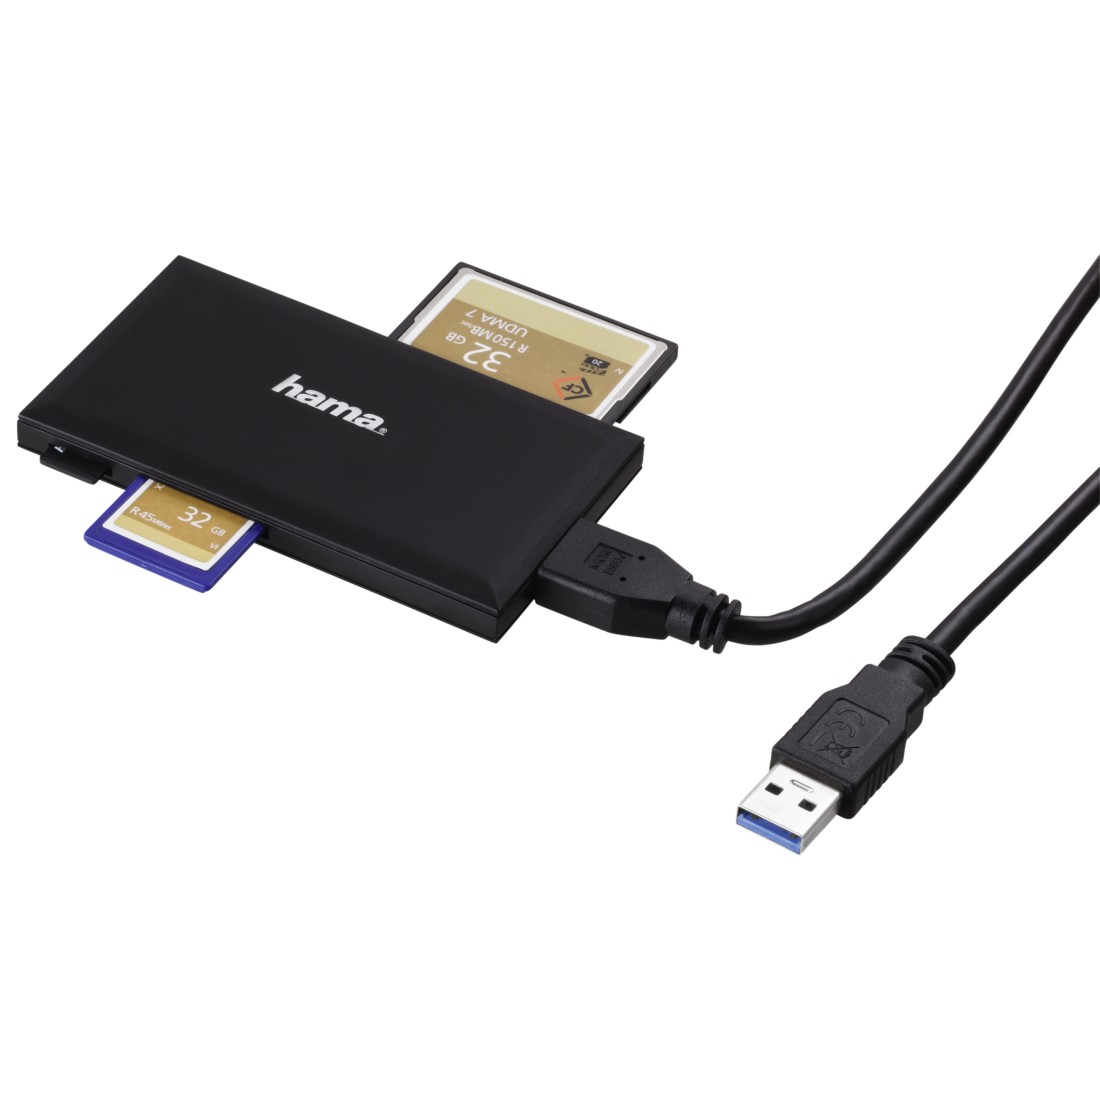 You Recently Viewed Hama USB 3.0 Multi-Card Reader, SD/microSD/CF/MS Image